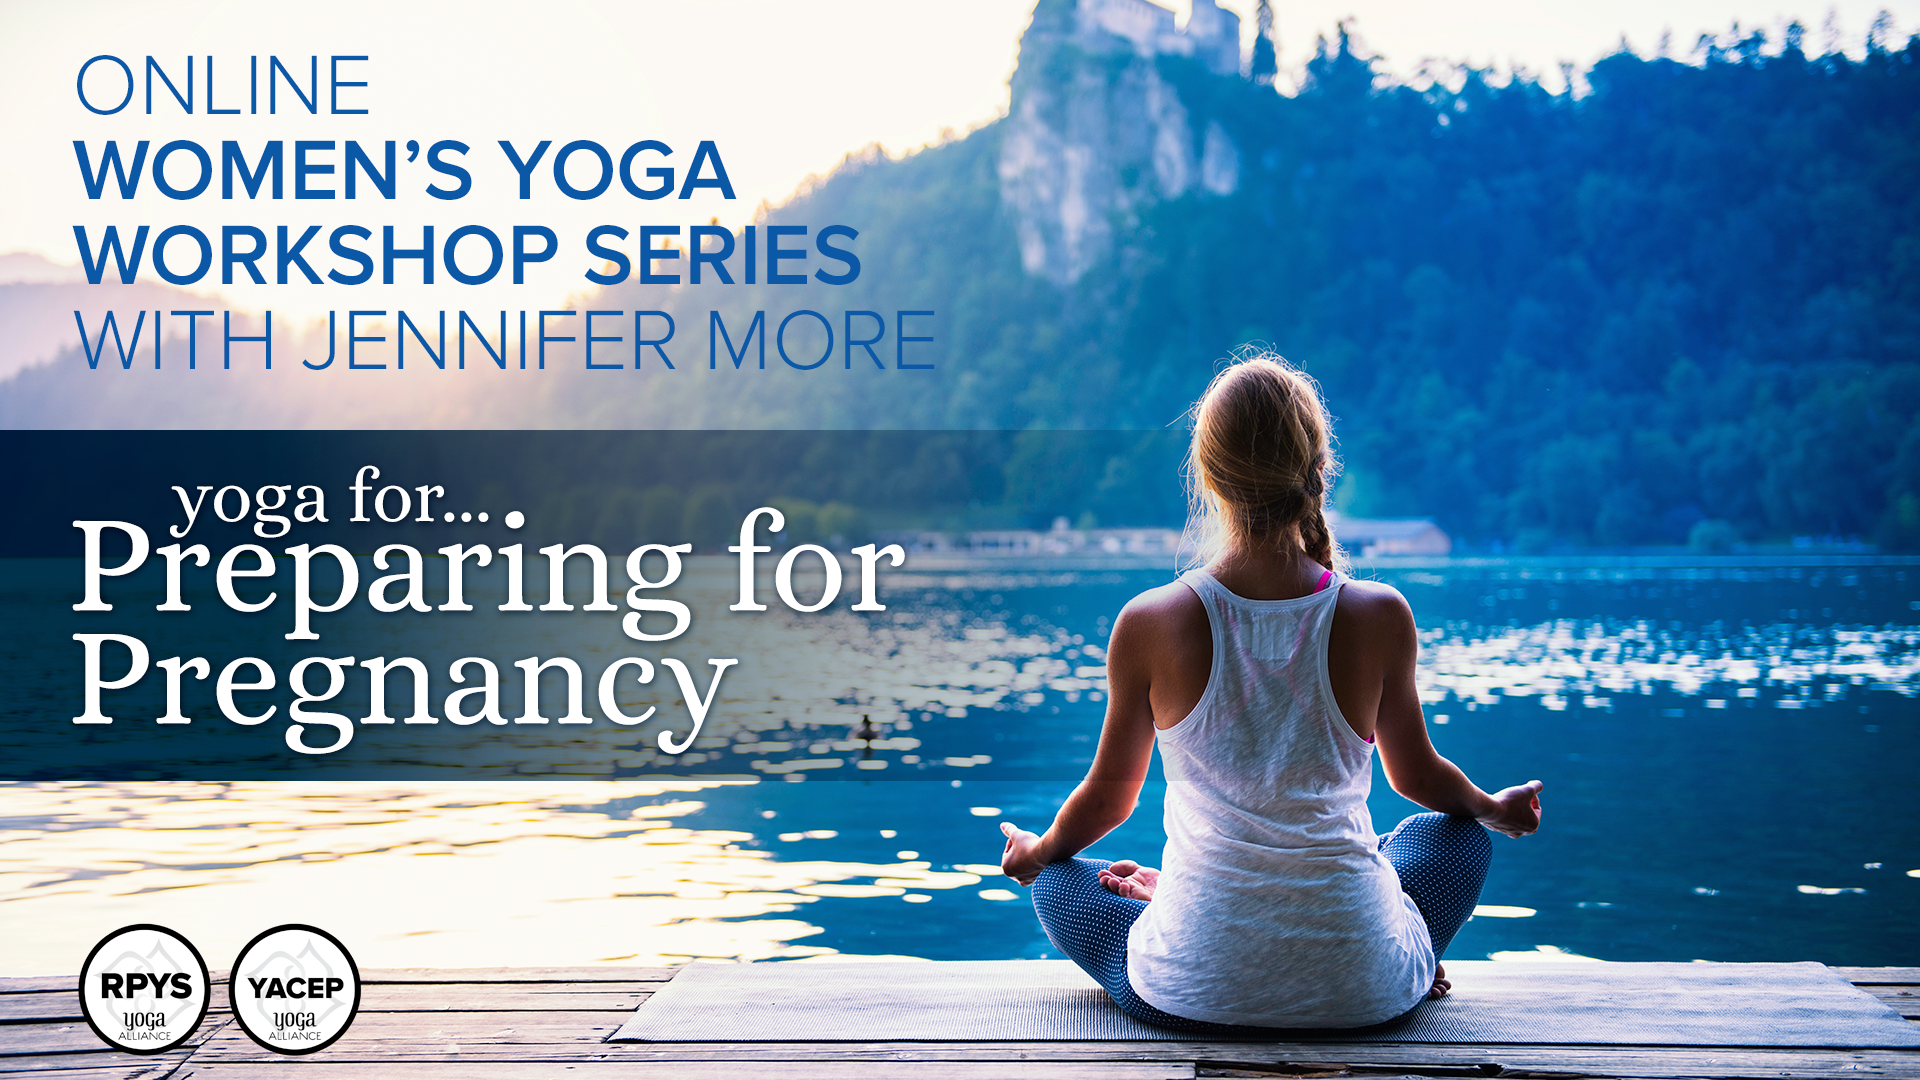 Yoga for Preparing for Pregnancy